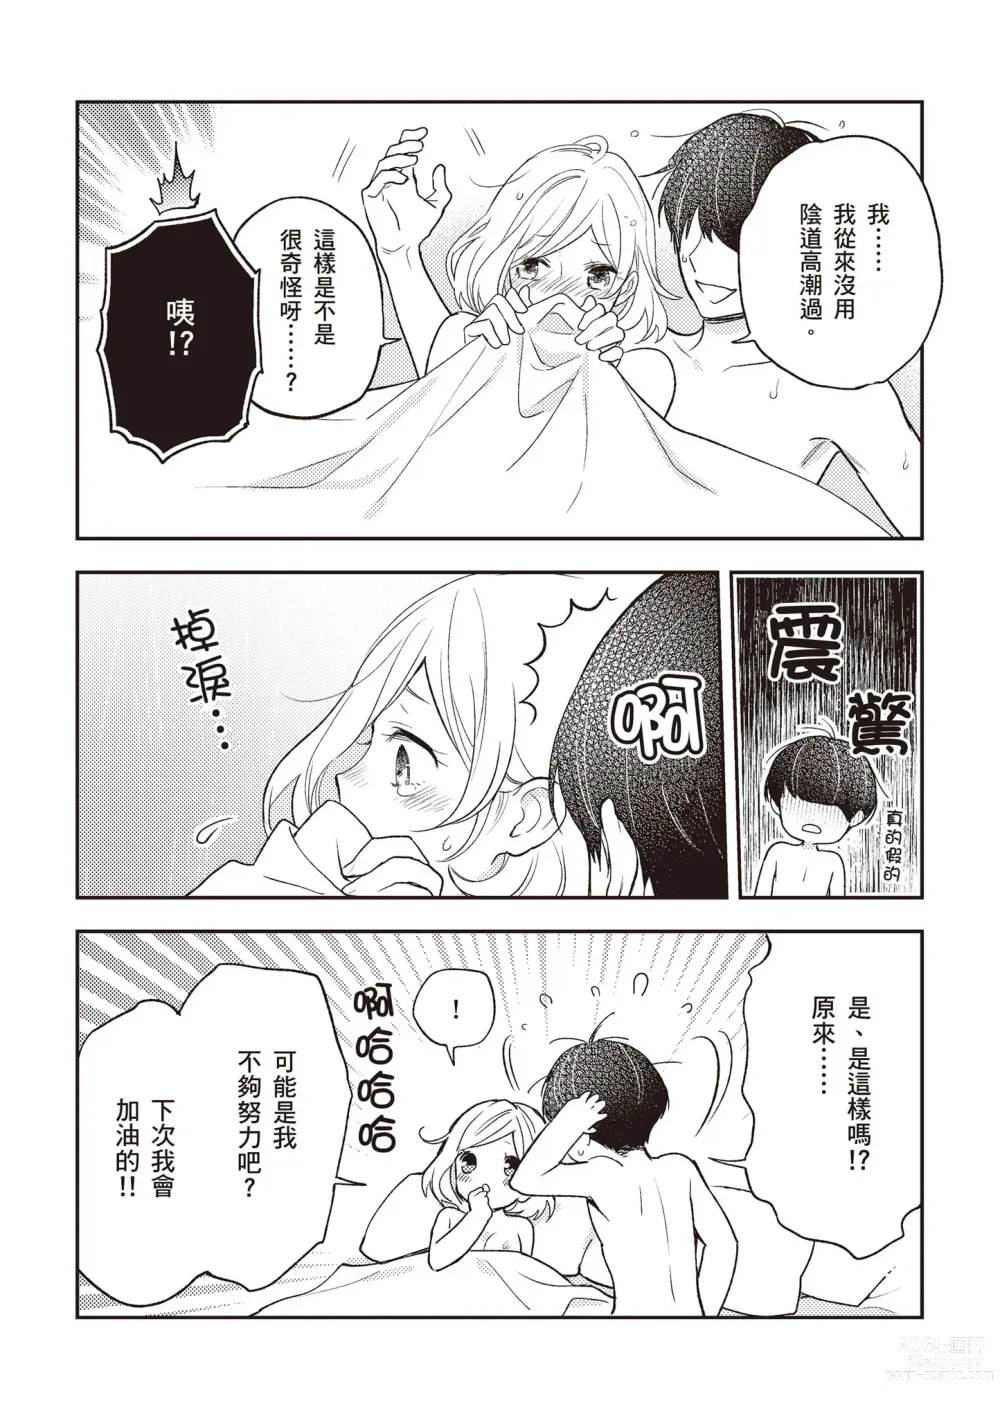 Page 3 of manga 內部攻略！圖解陰道快感開發･高潮完全指南